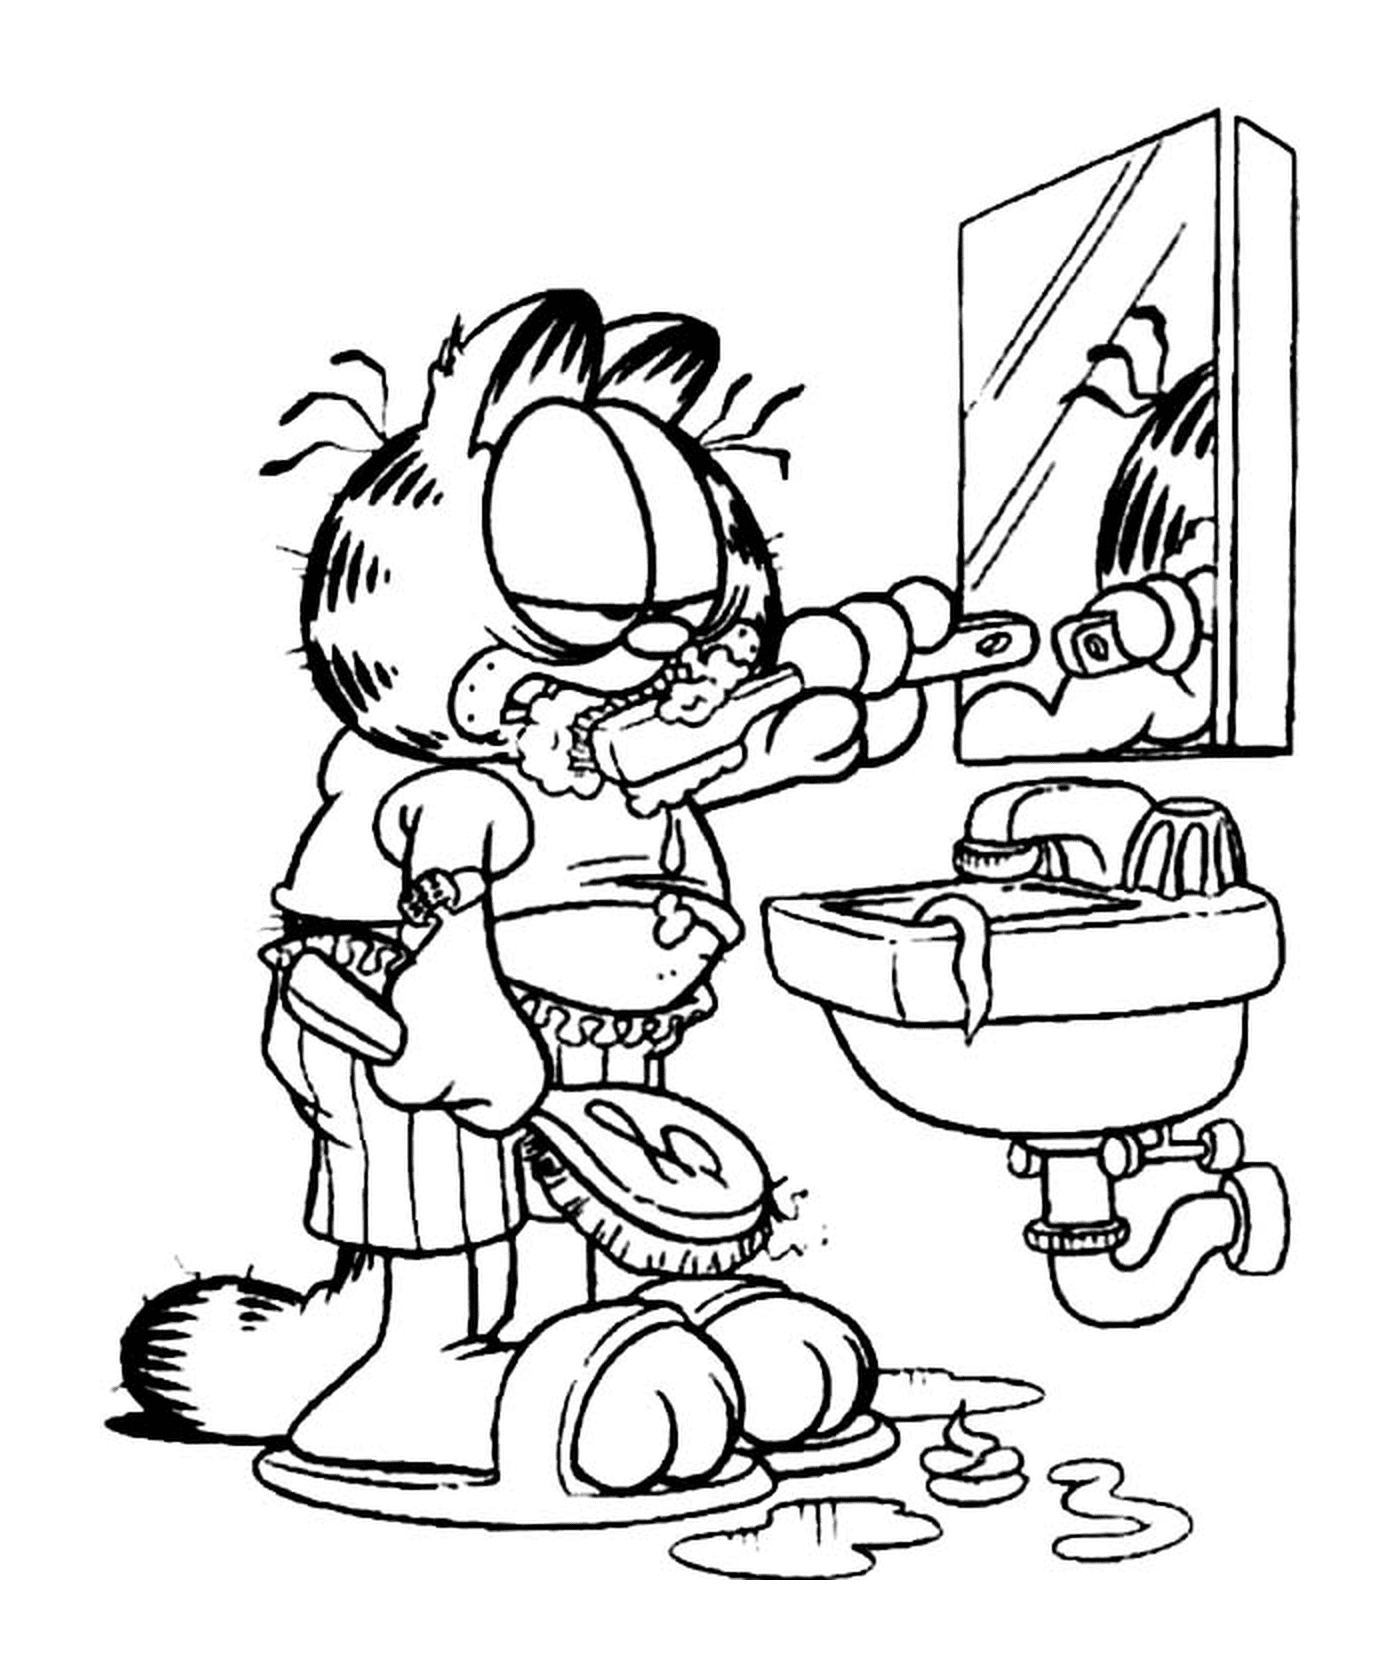  Garfield brushes his teeth 